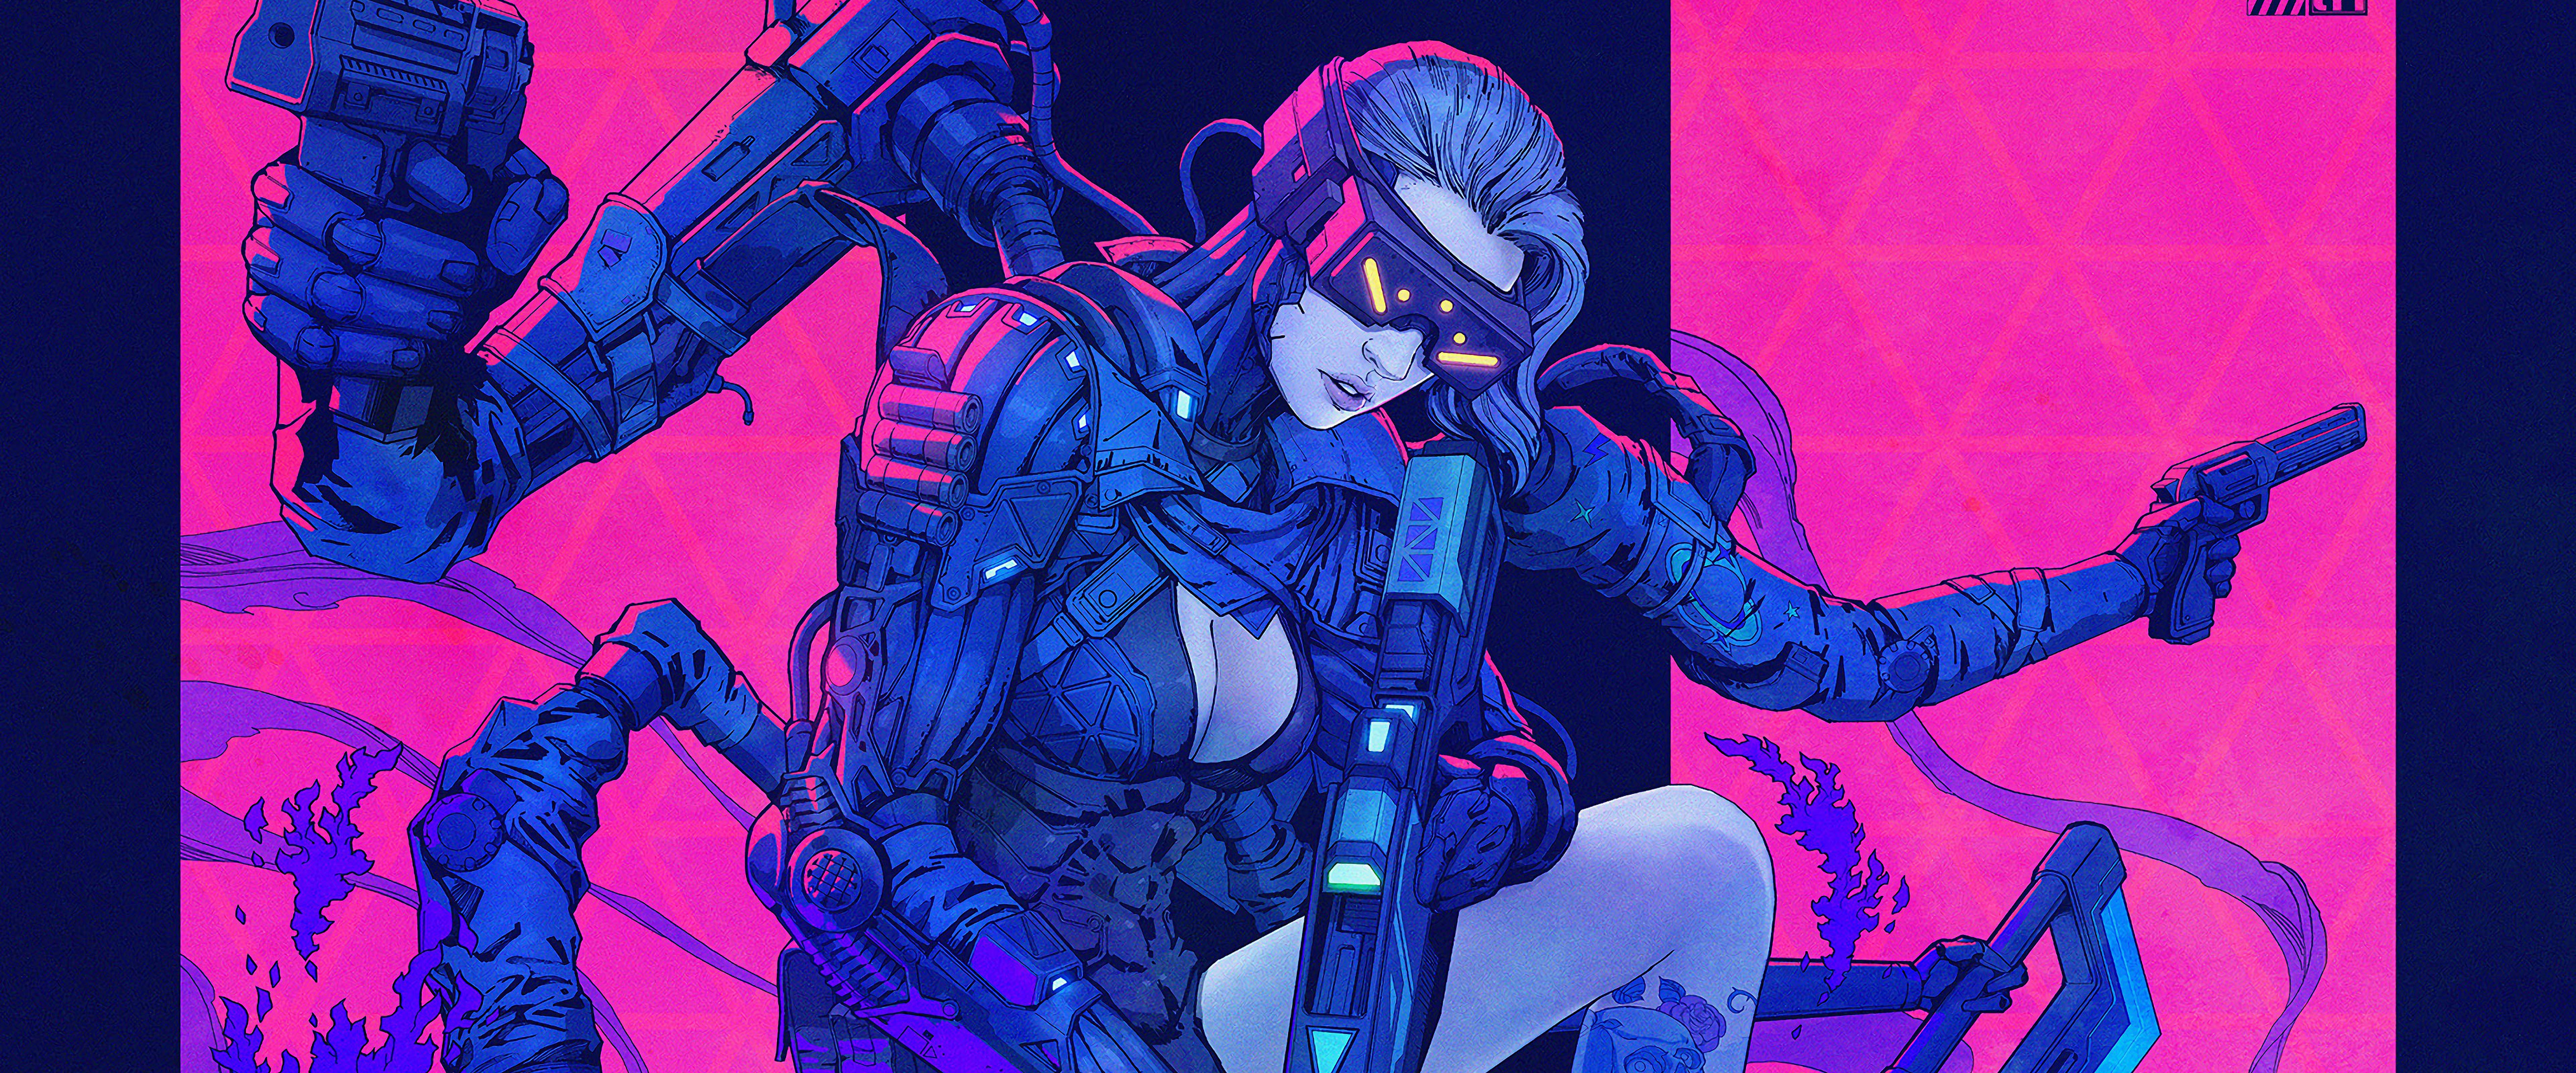 3440x1440 Cyberpunk Neon Girl Digital Art UltraWide Quad HD 1440P